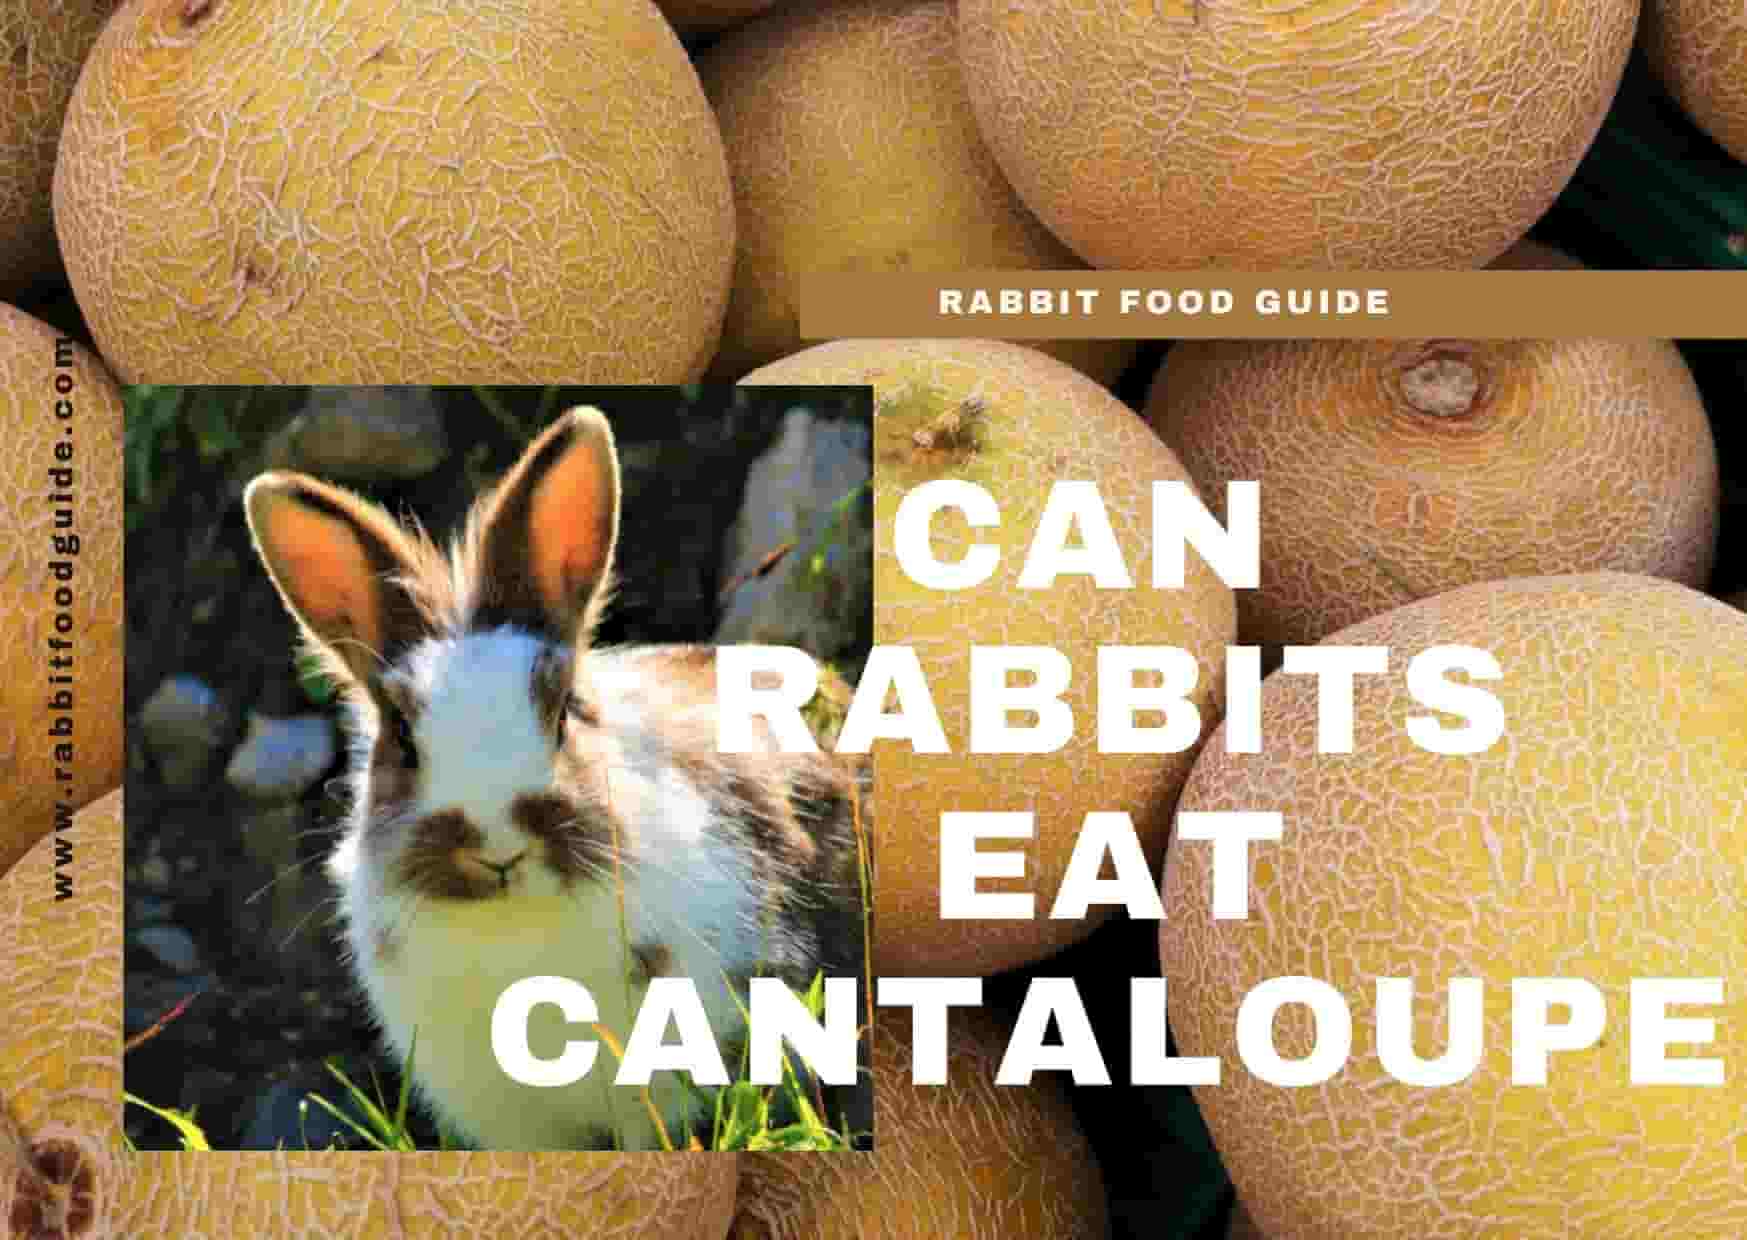 Can Rabbits Eat Cantaloupe